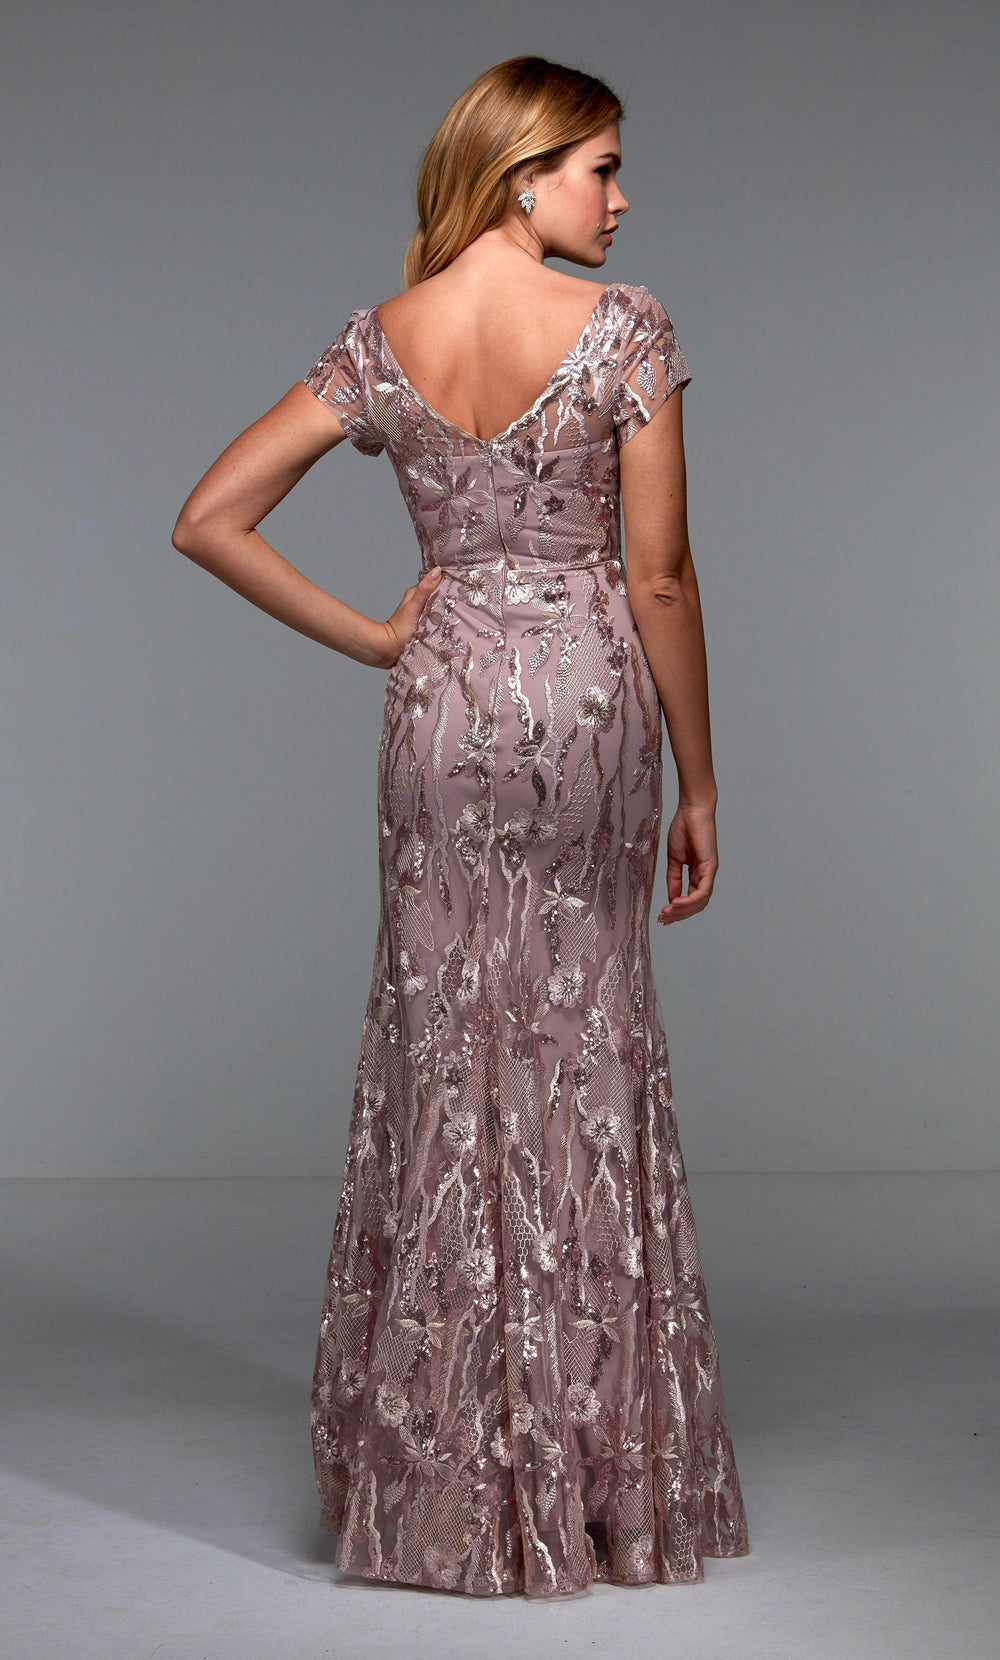 Formal Dress: 27505. Long Evening Dress, Illusion Neckline, Flowy